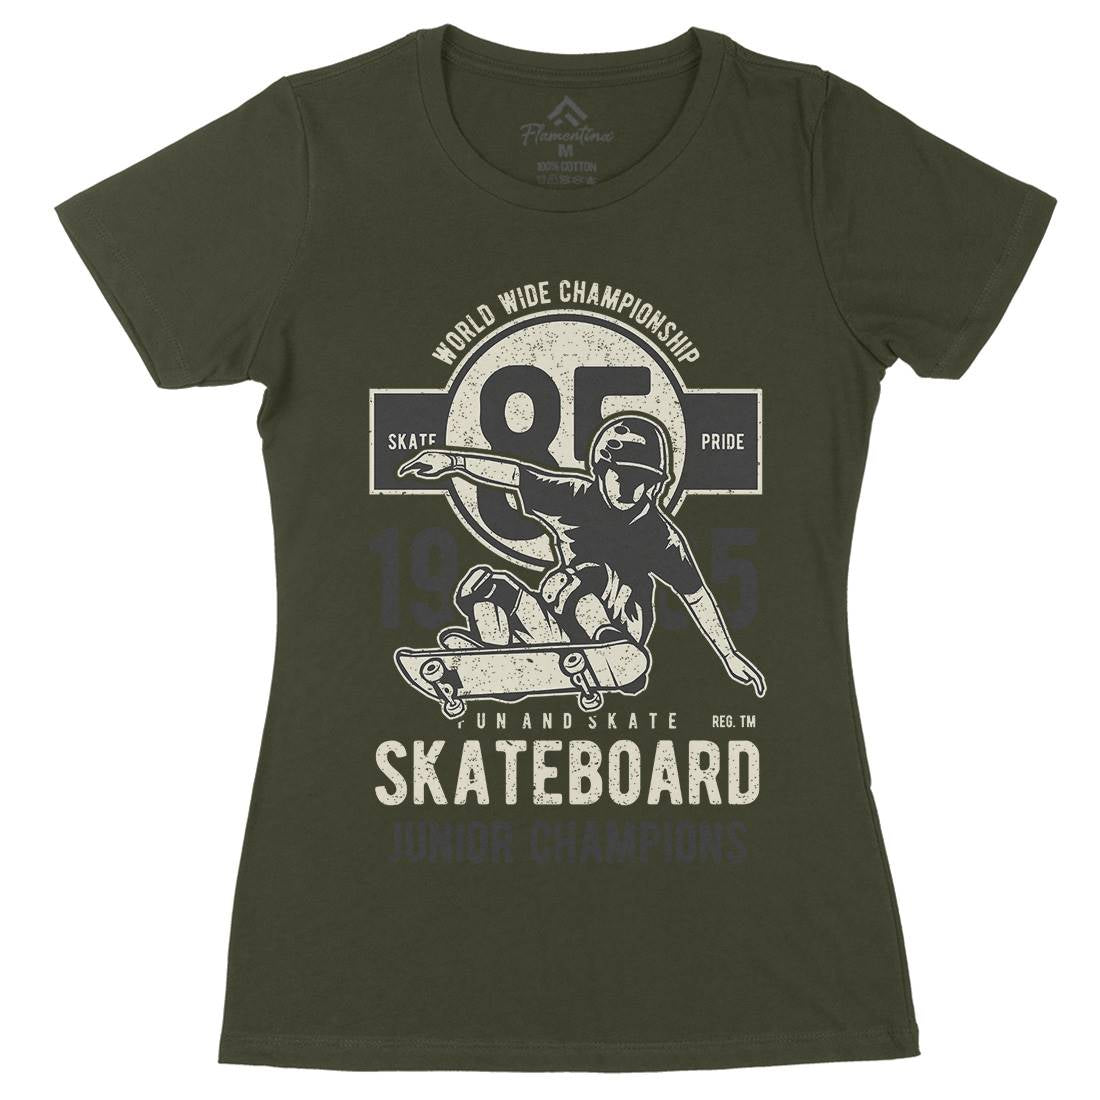 Skateboard Junior Champions Womens Organic Crew Neck T-Shirt Skate A755